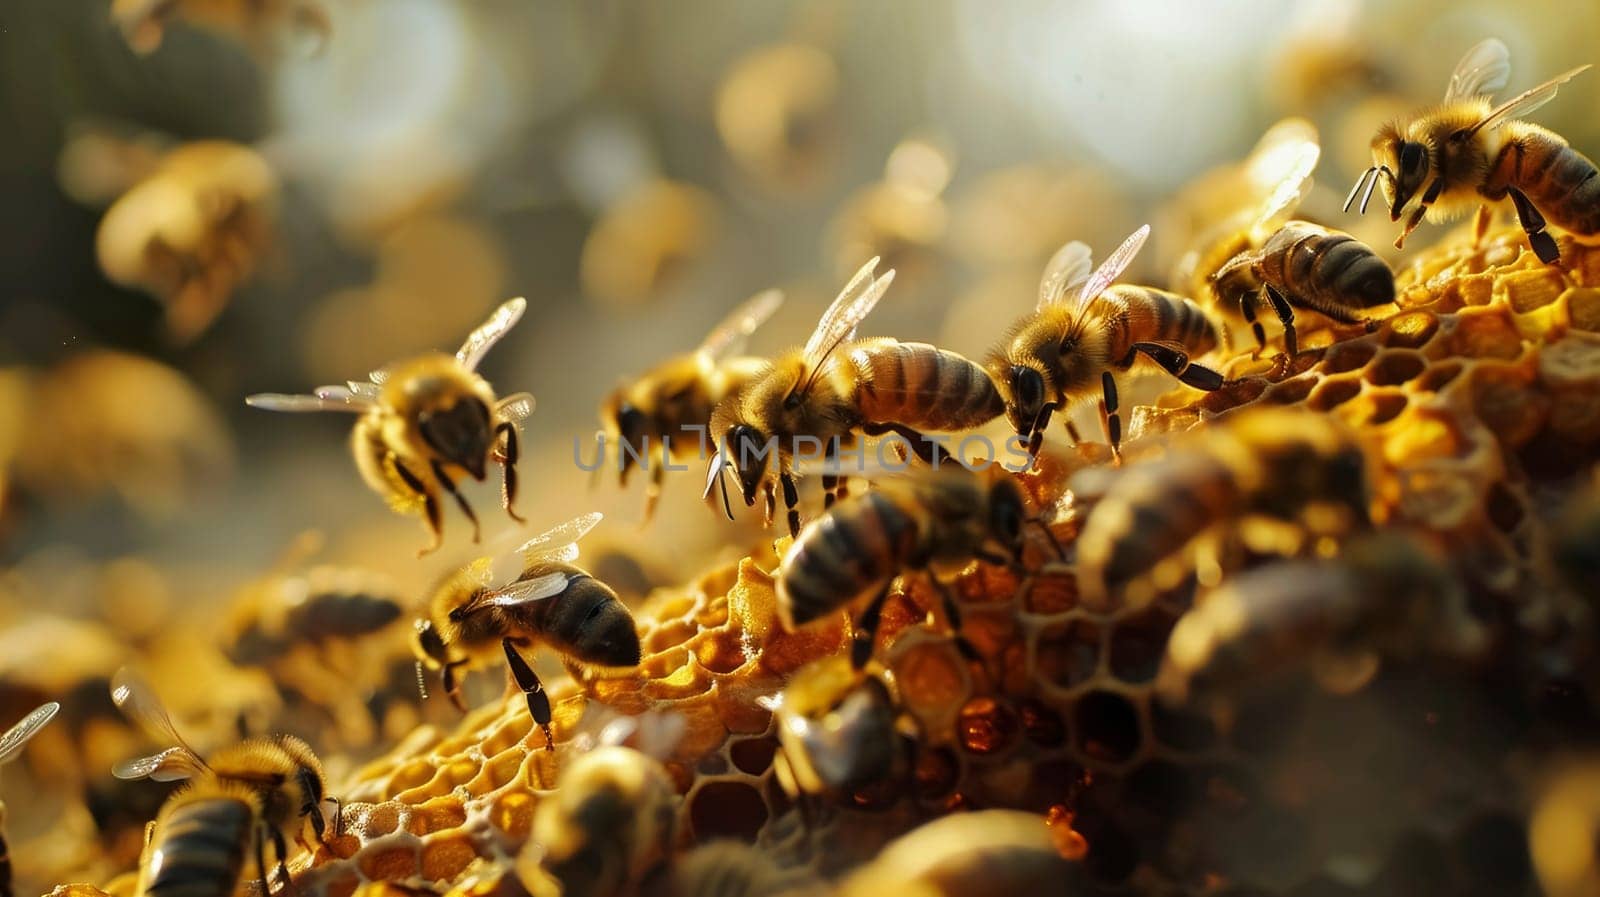 Honeybees bustling on honeycomb in warm sunlight